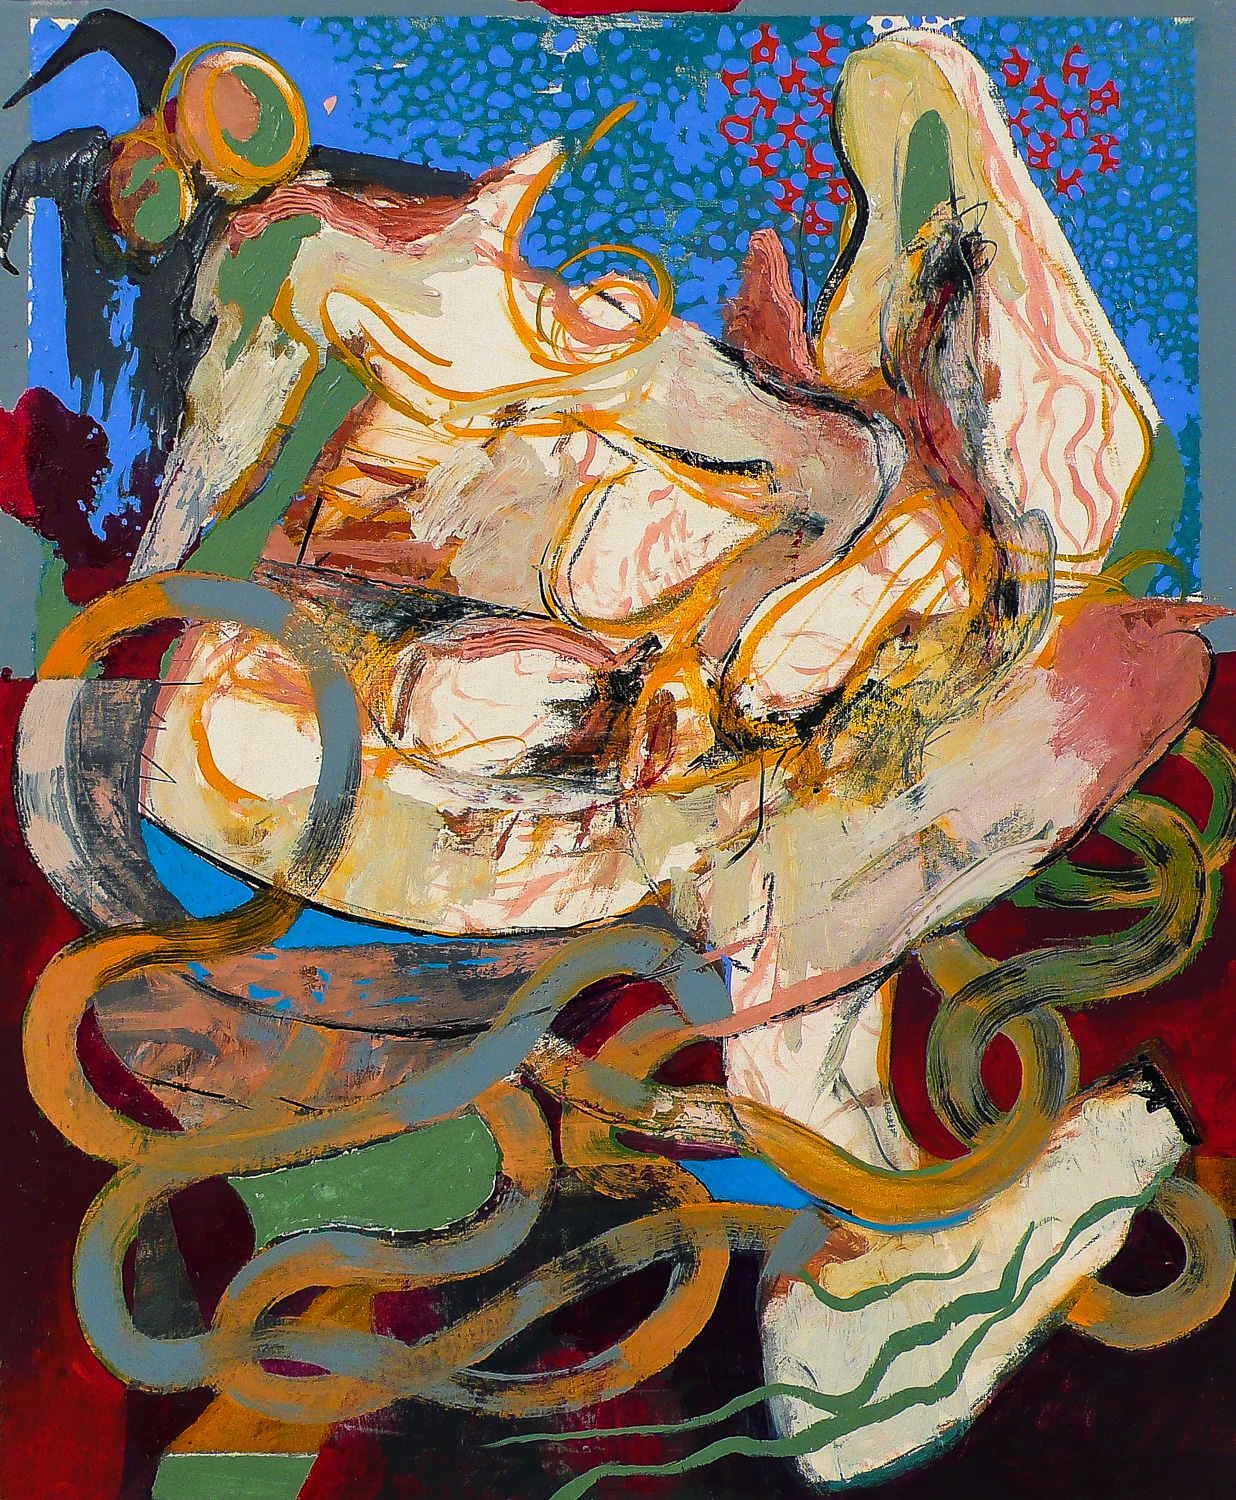   Anchor (Laocoön Series)&nbsp; , 2010 Oil on canvas 24 x 20" 